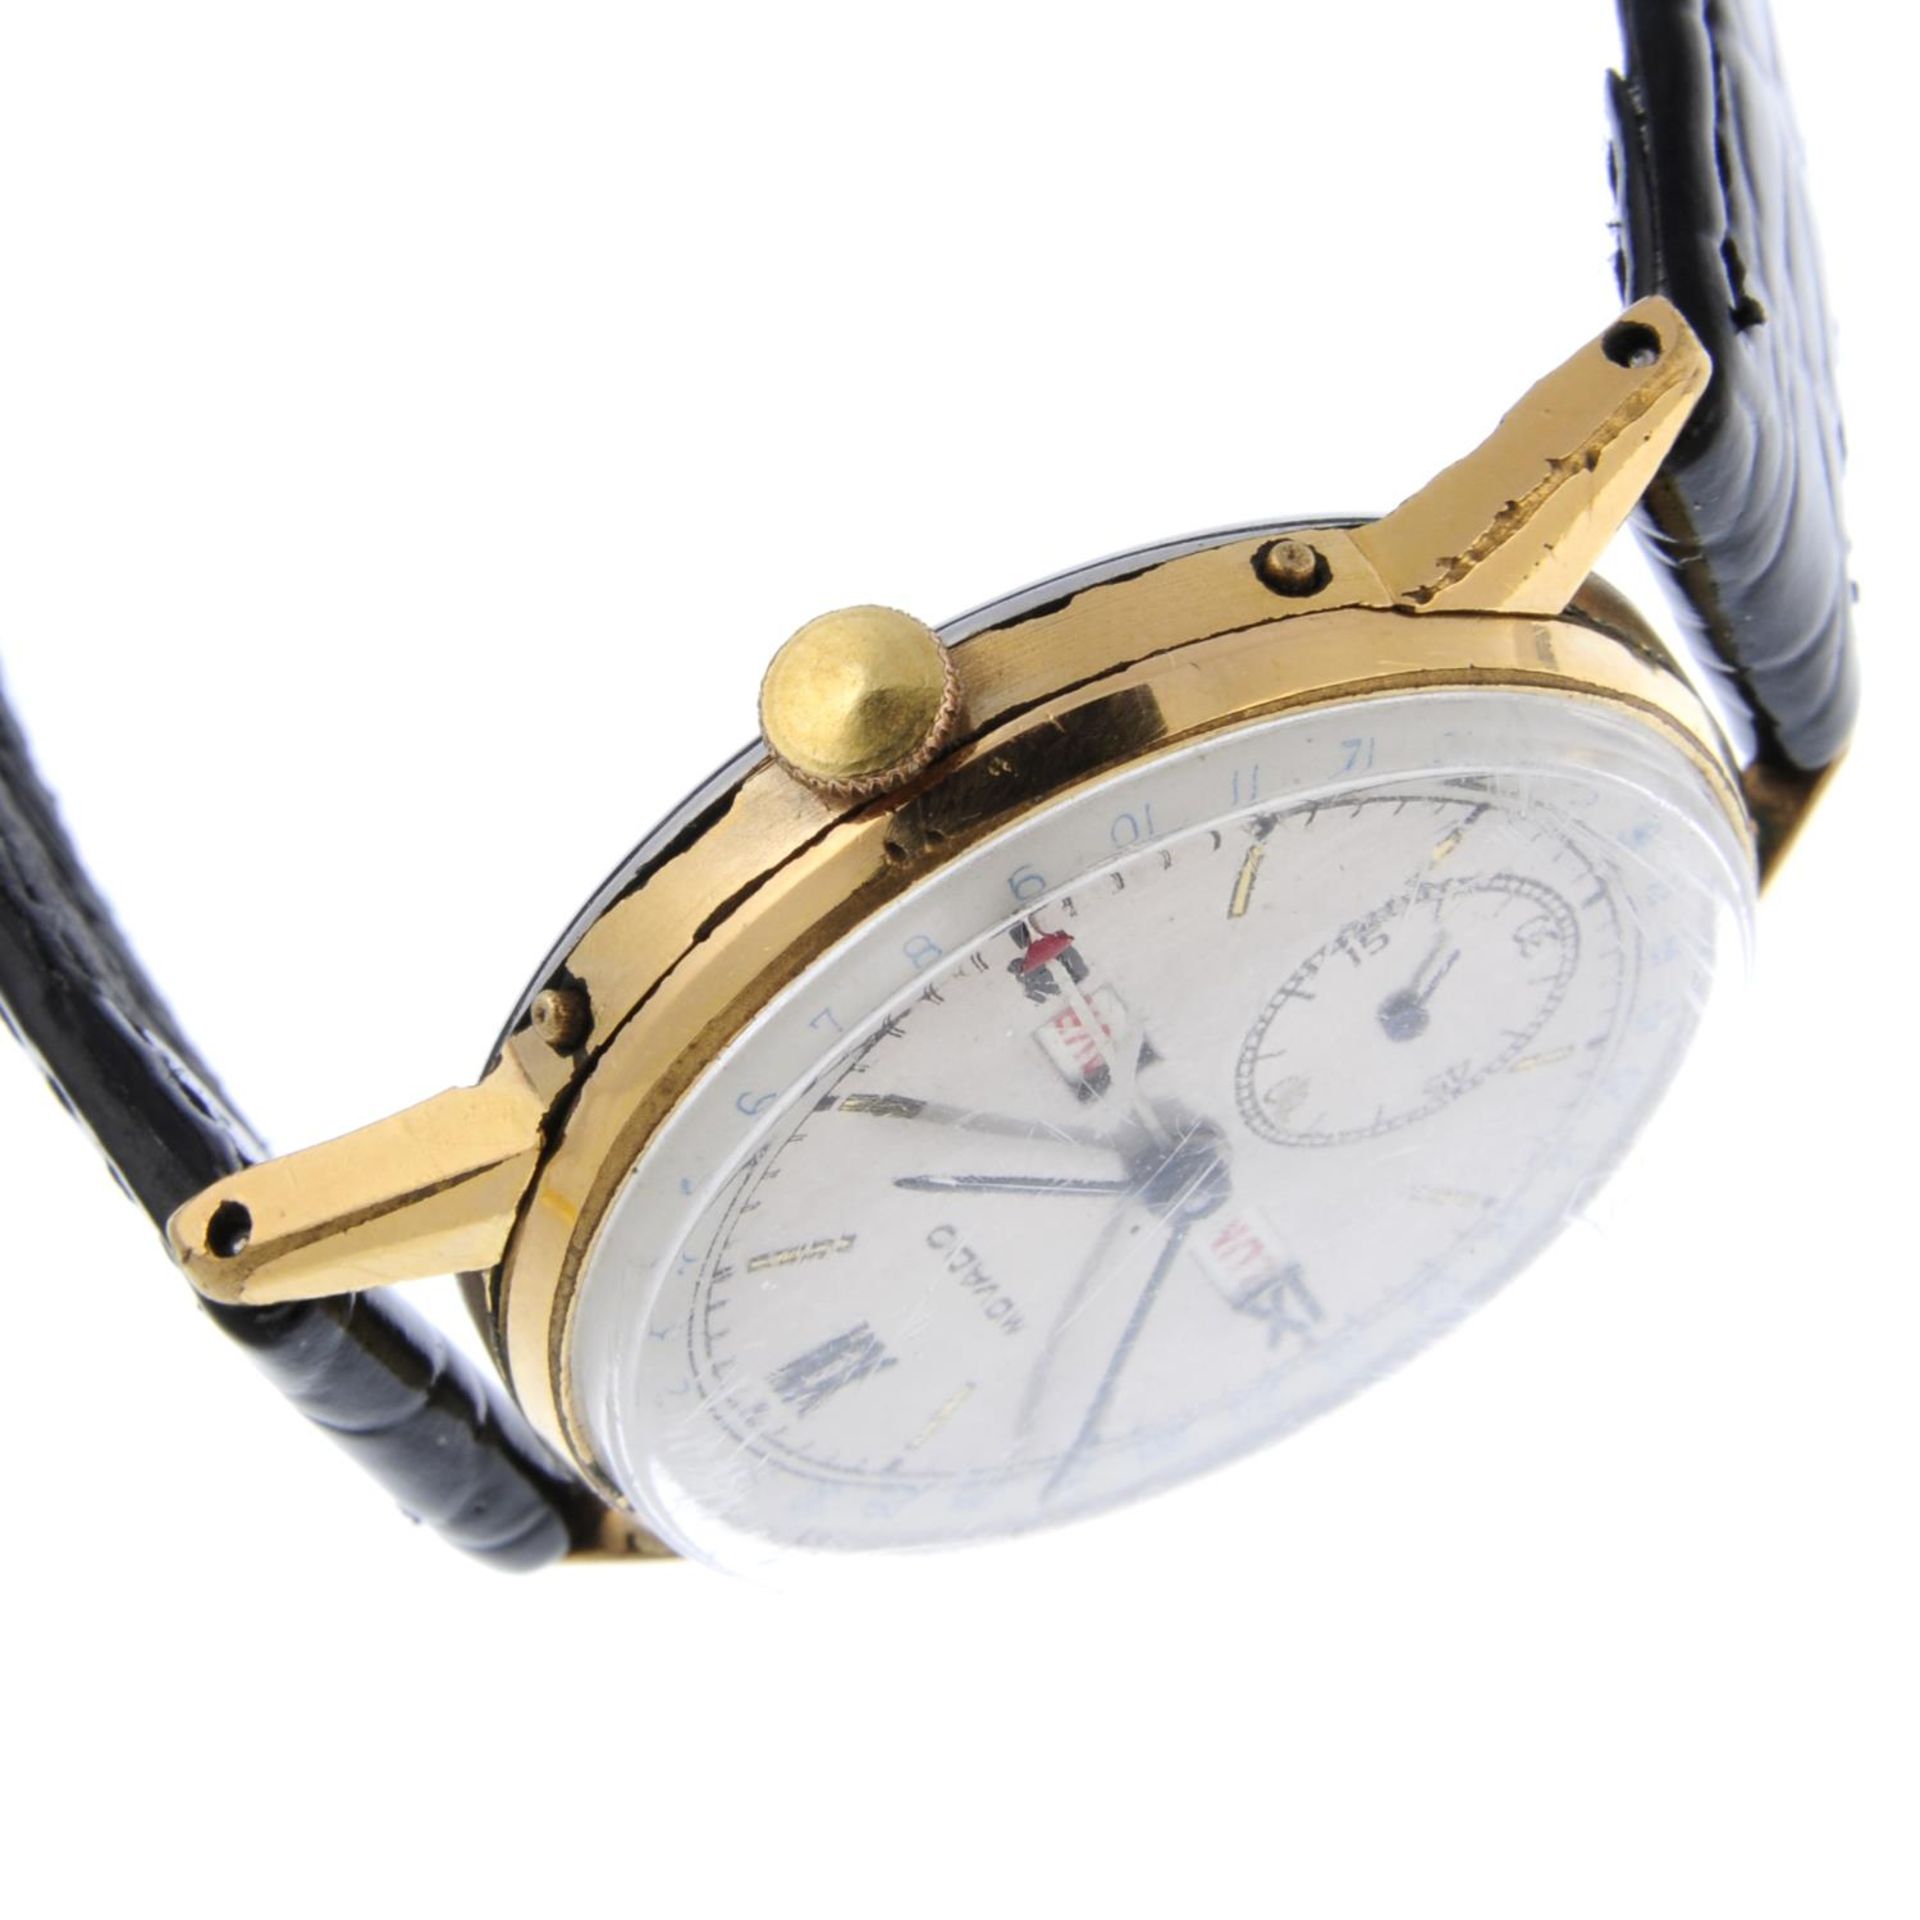 MOVADO - a gentleman's triple-date wrist watch. - Image 4 of 4